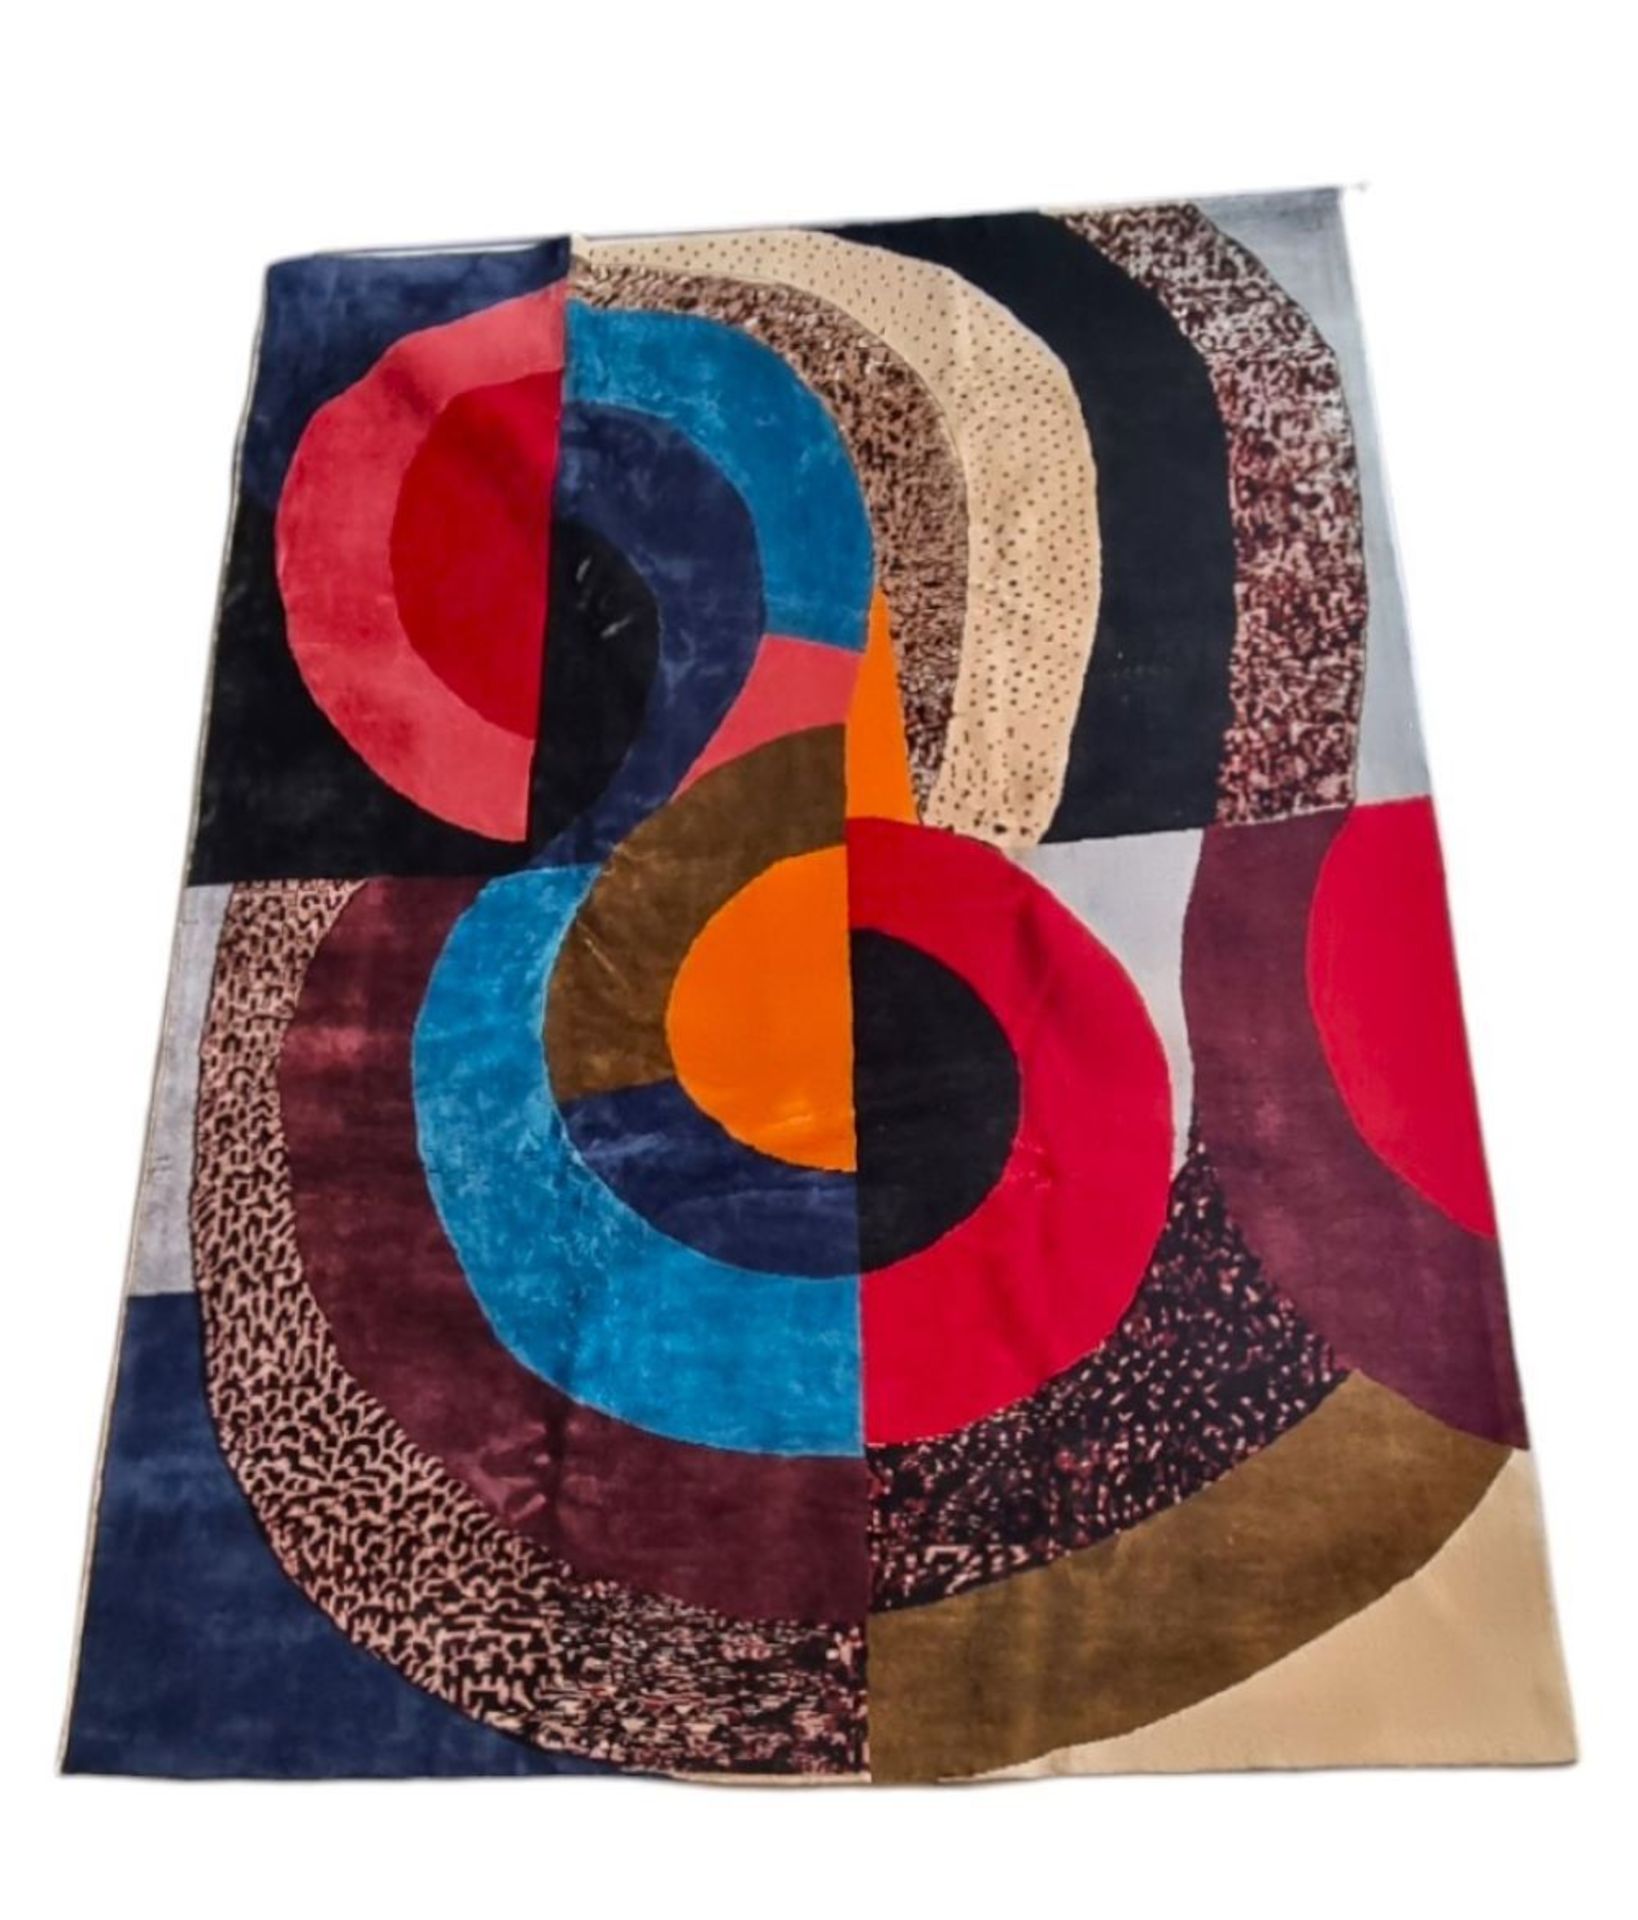 Sonia DELAUNAY "Hippocampe" Colored wool carpet, circa 1970.